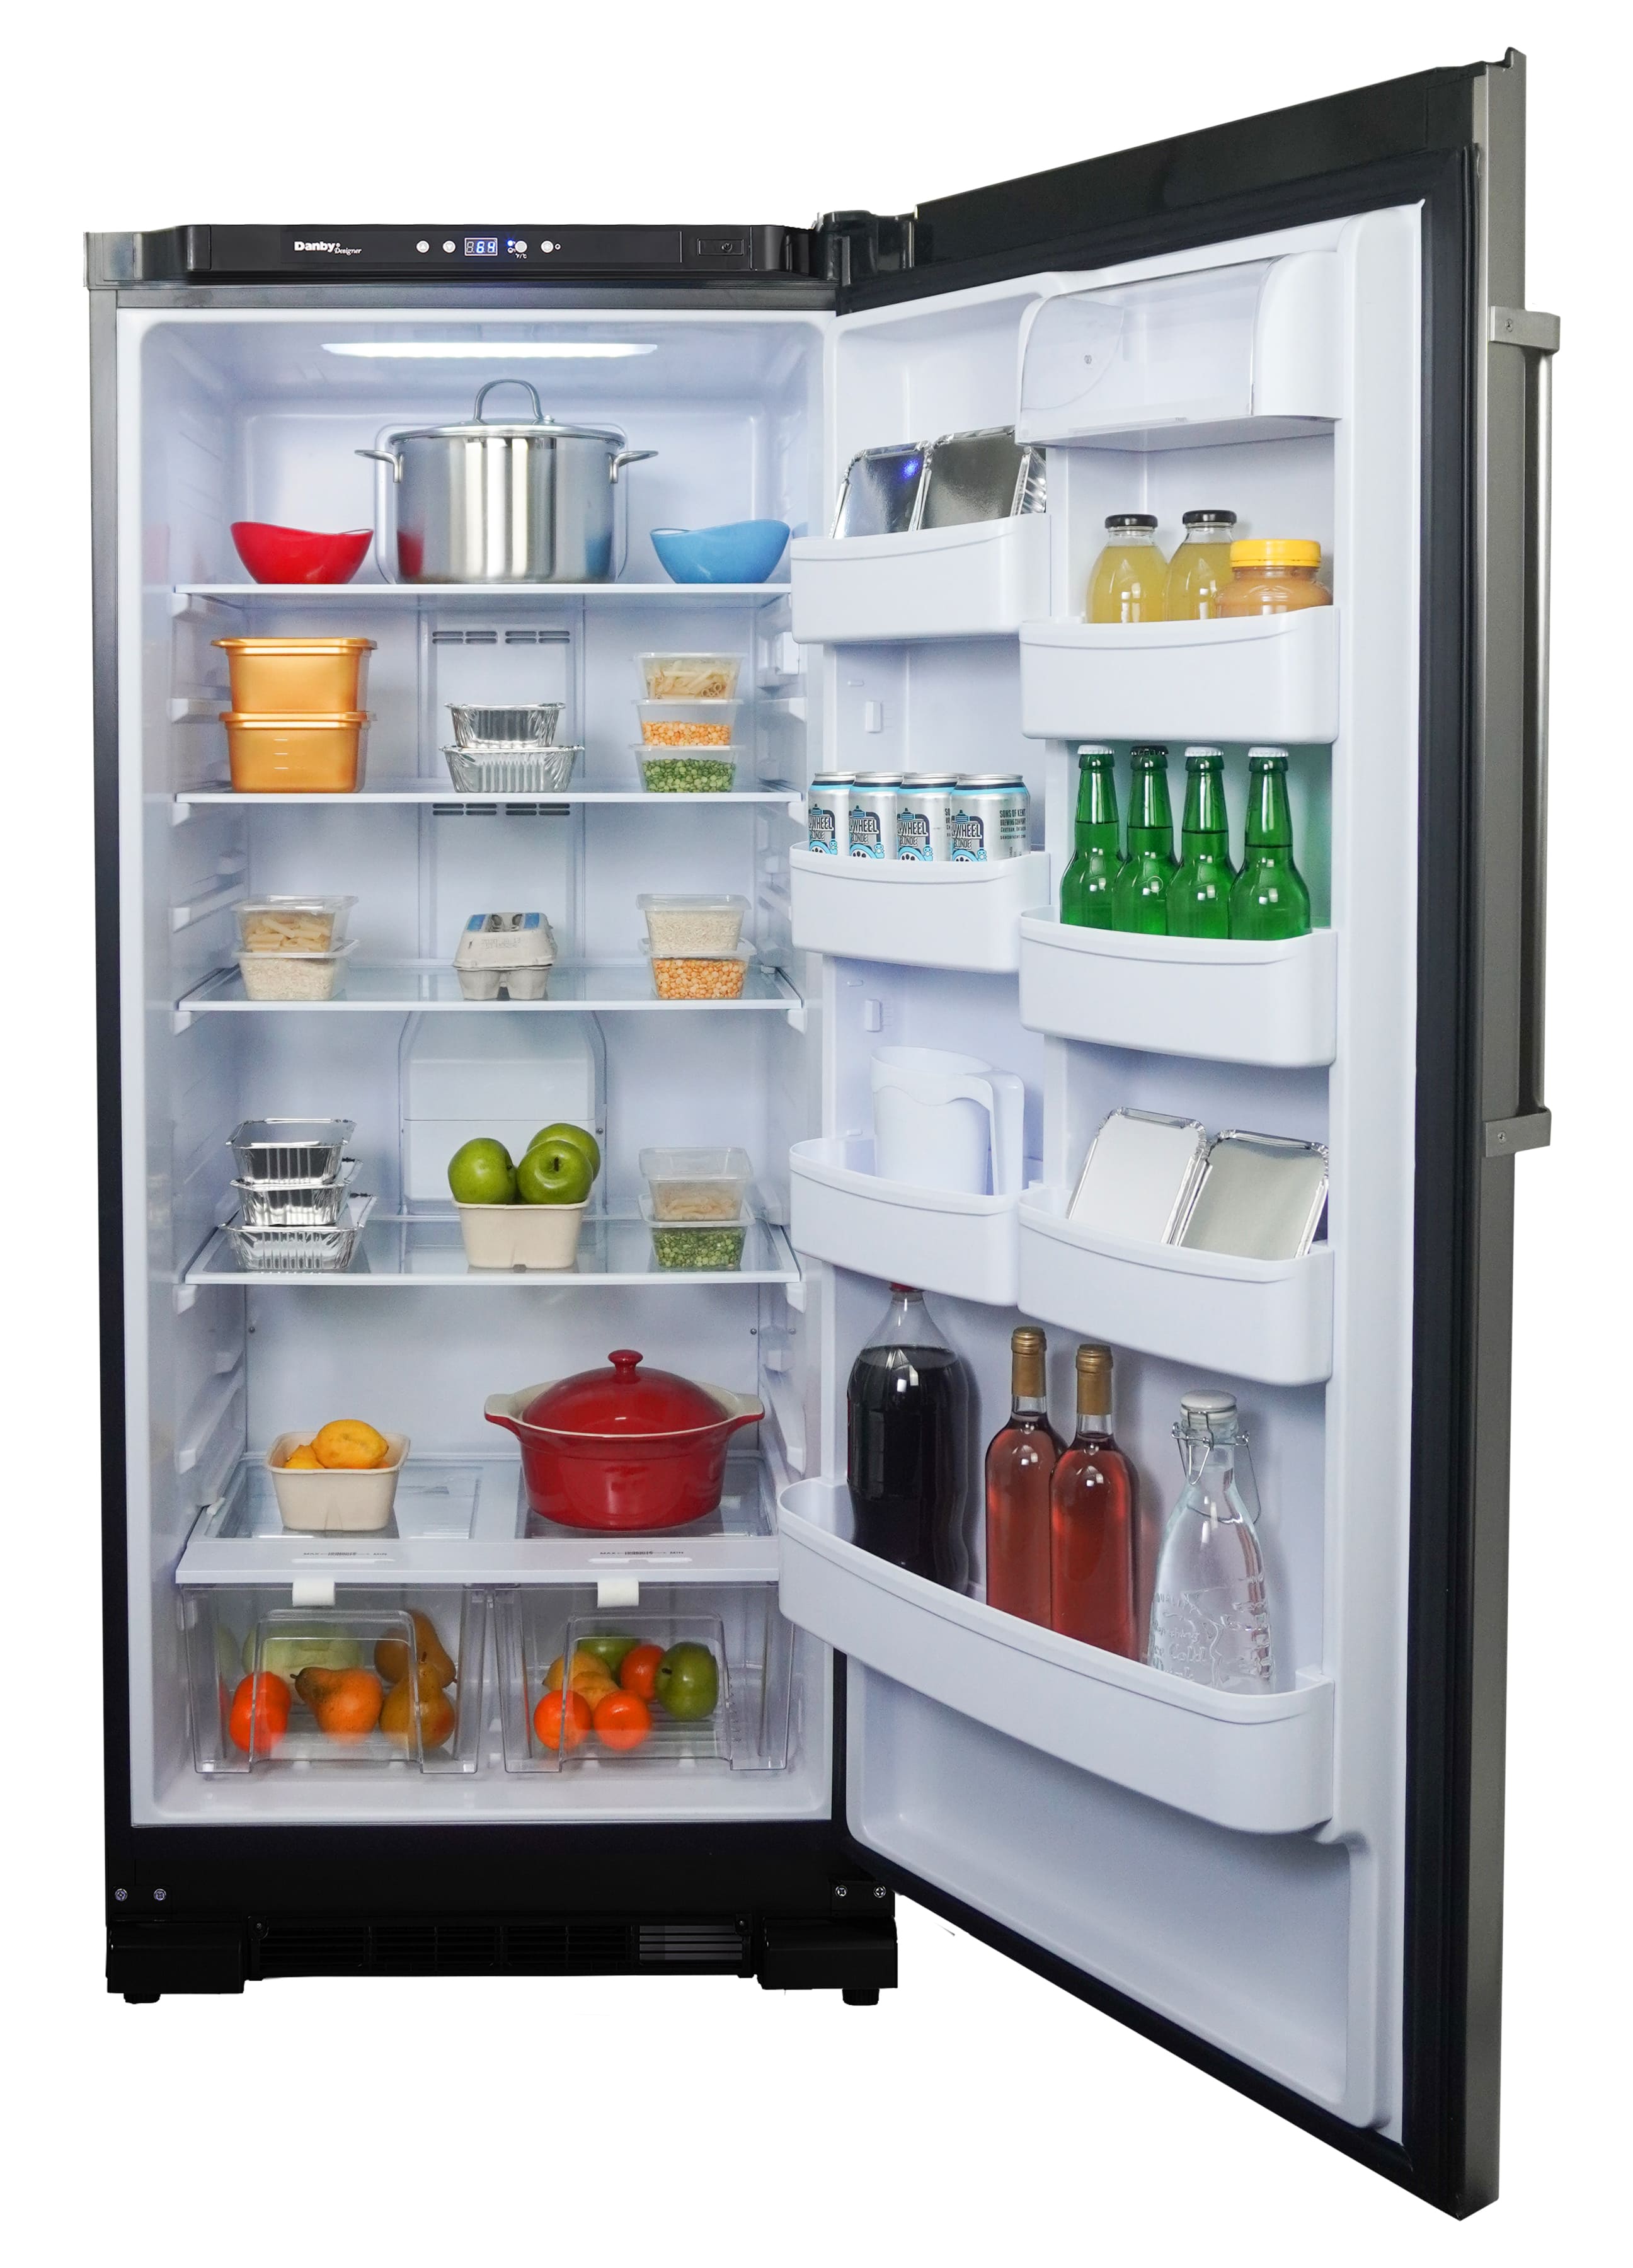 Danby Designer 17 Cu. Ft. Apartment Size Refrigerator